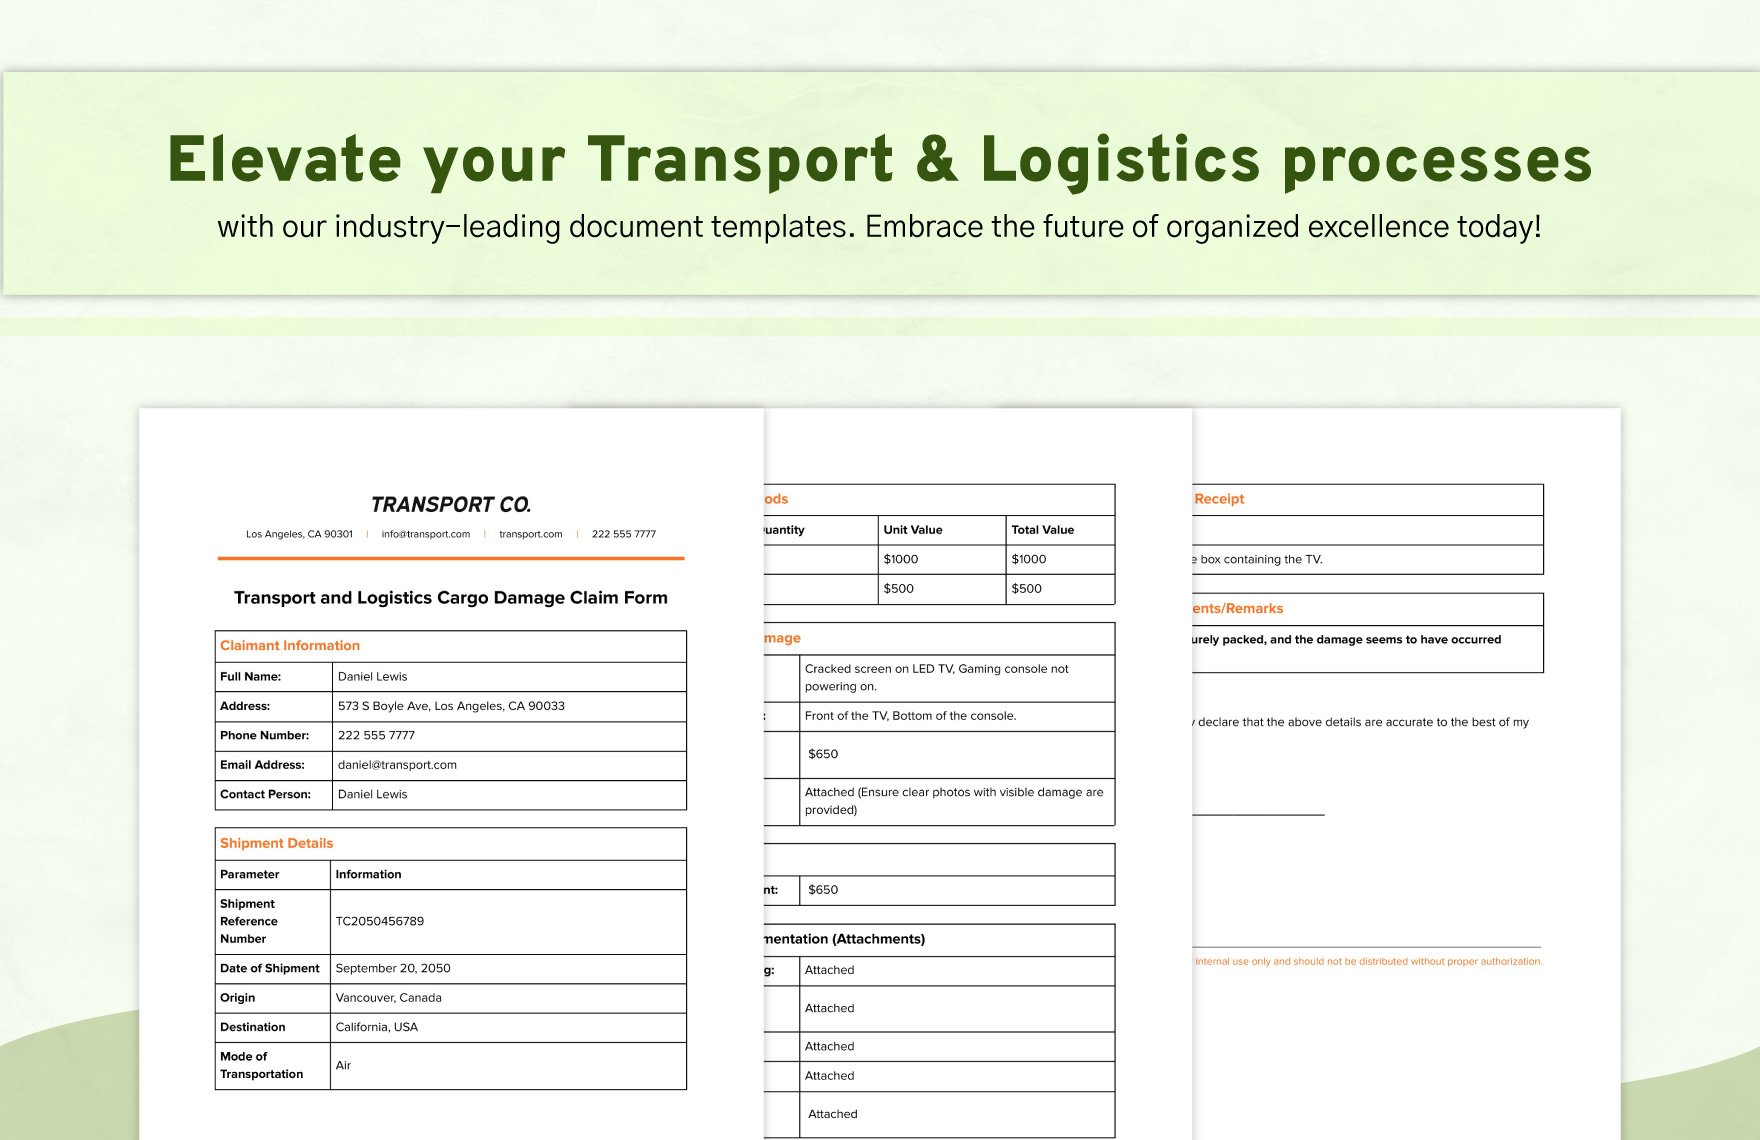 Transport and Logistics Cargo Damage Claim Form Template